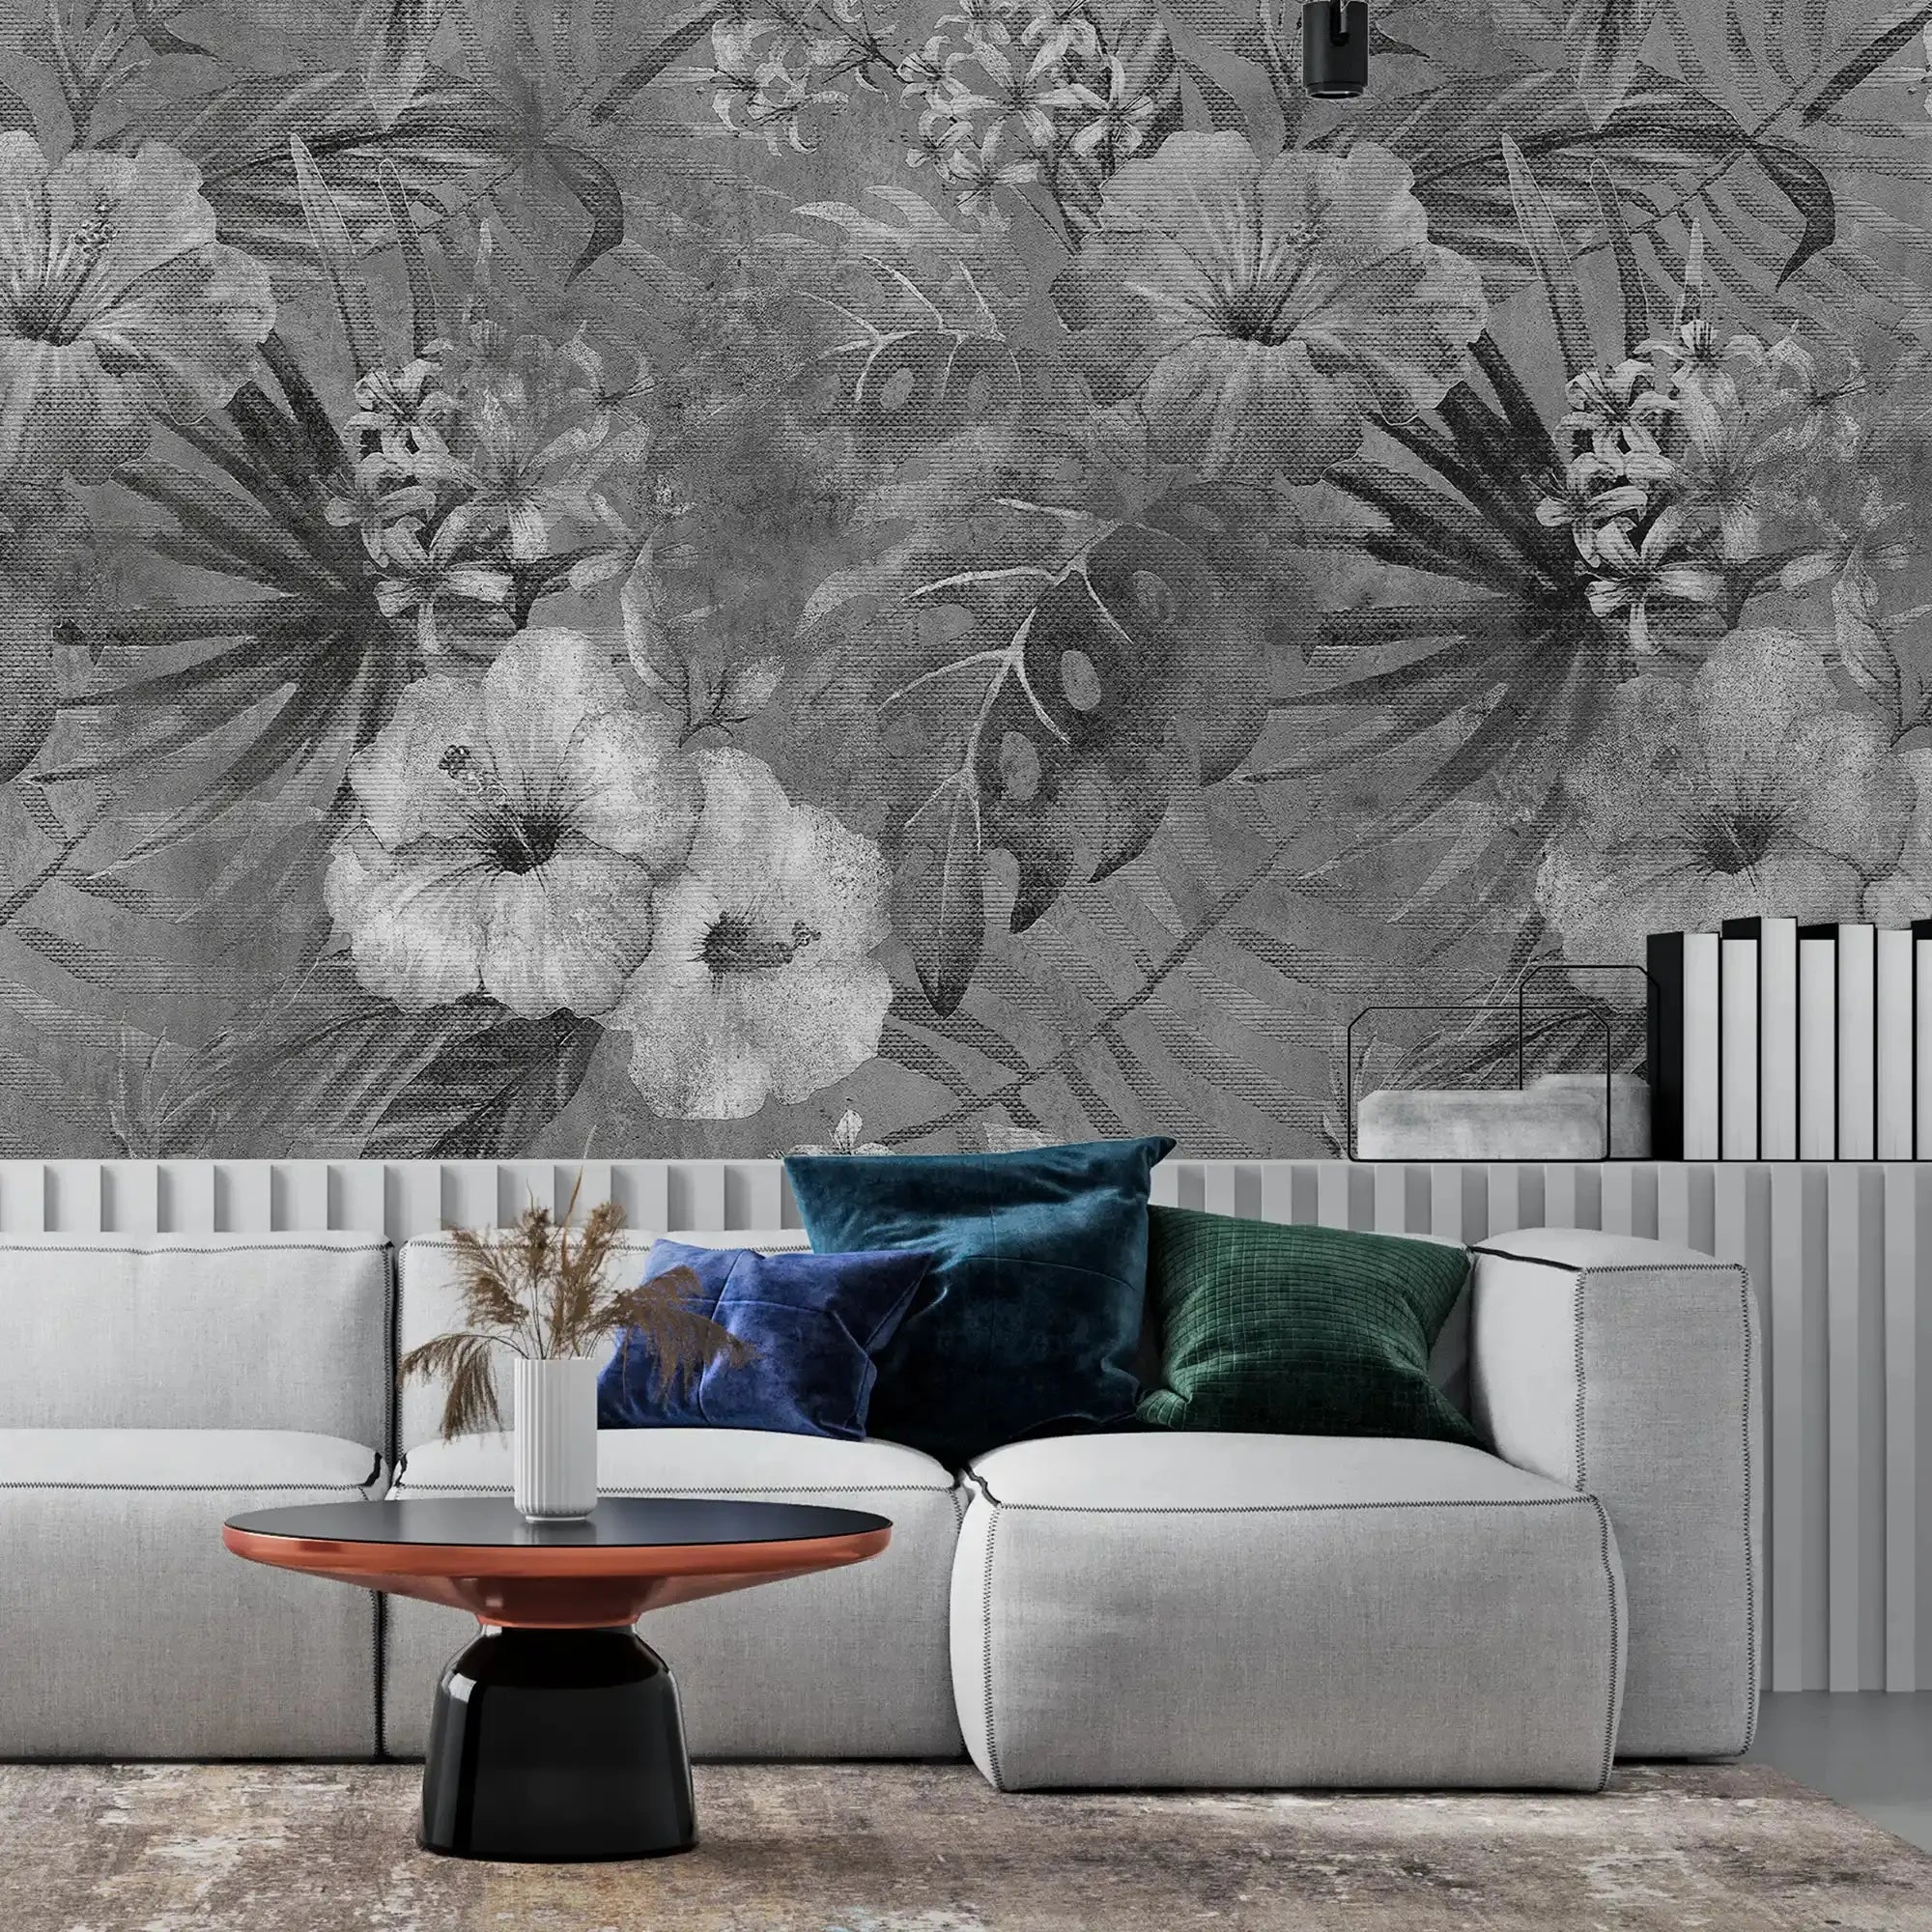 3081-F / Vibrant Floral Peelable Stickable Wallpaper - Transform Your Living Room with Easy Install Art Deco Design - Artevella